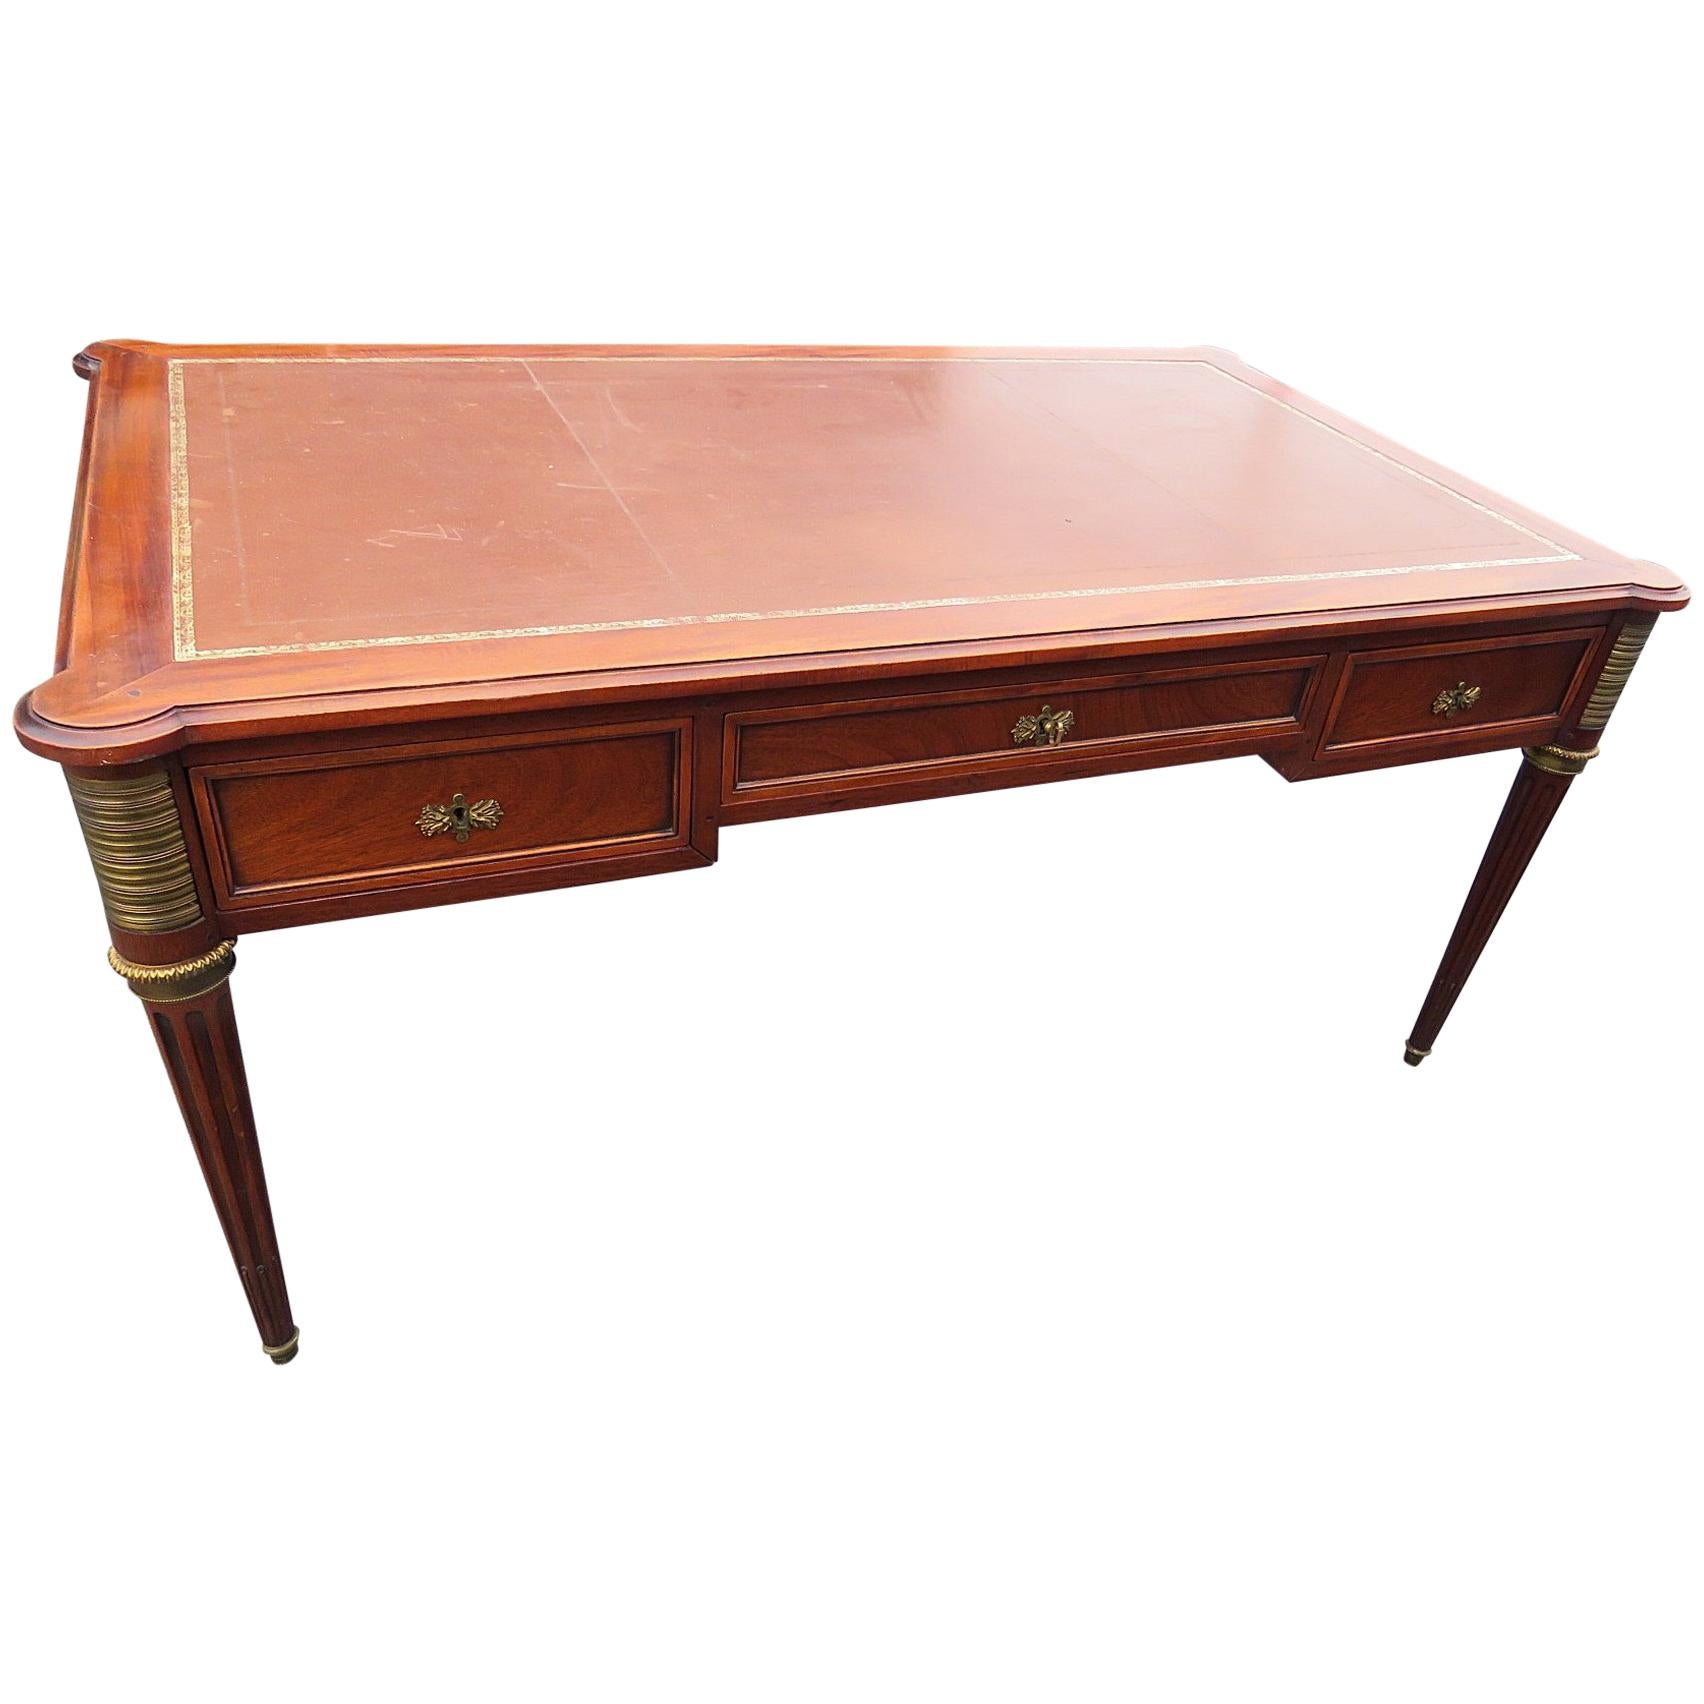 Mahogany Maison Jansen Louis XVI Leather Top Bureau Plat Writing Table Desk